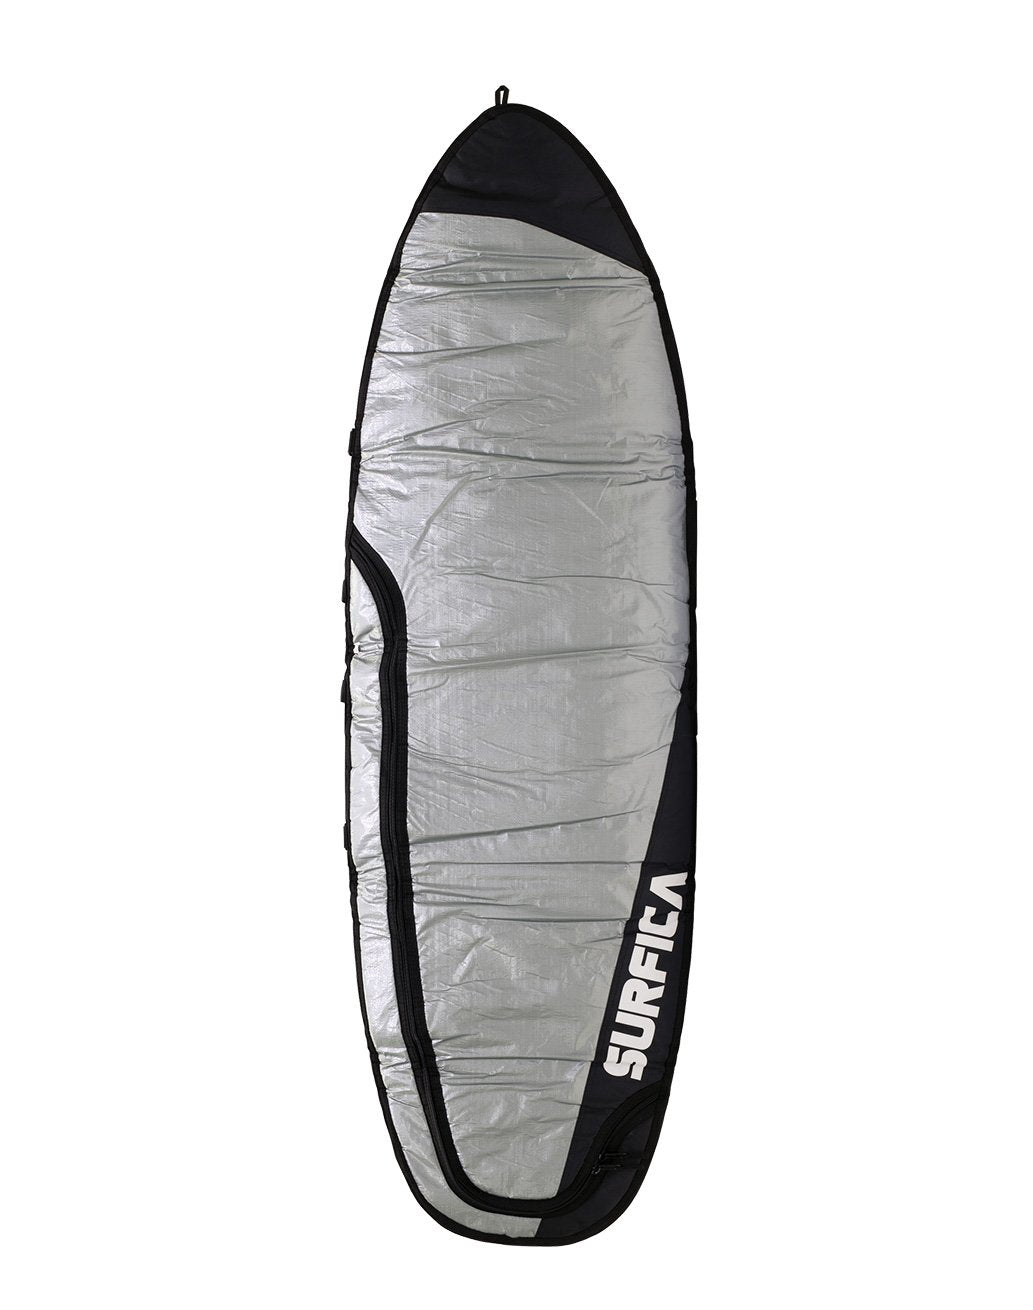 SURFICA SURFBOARD BAGS